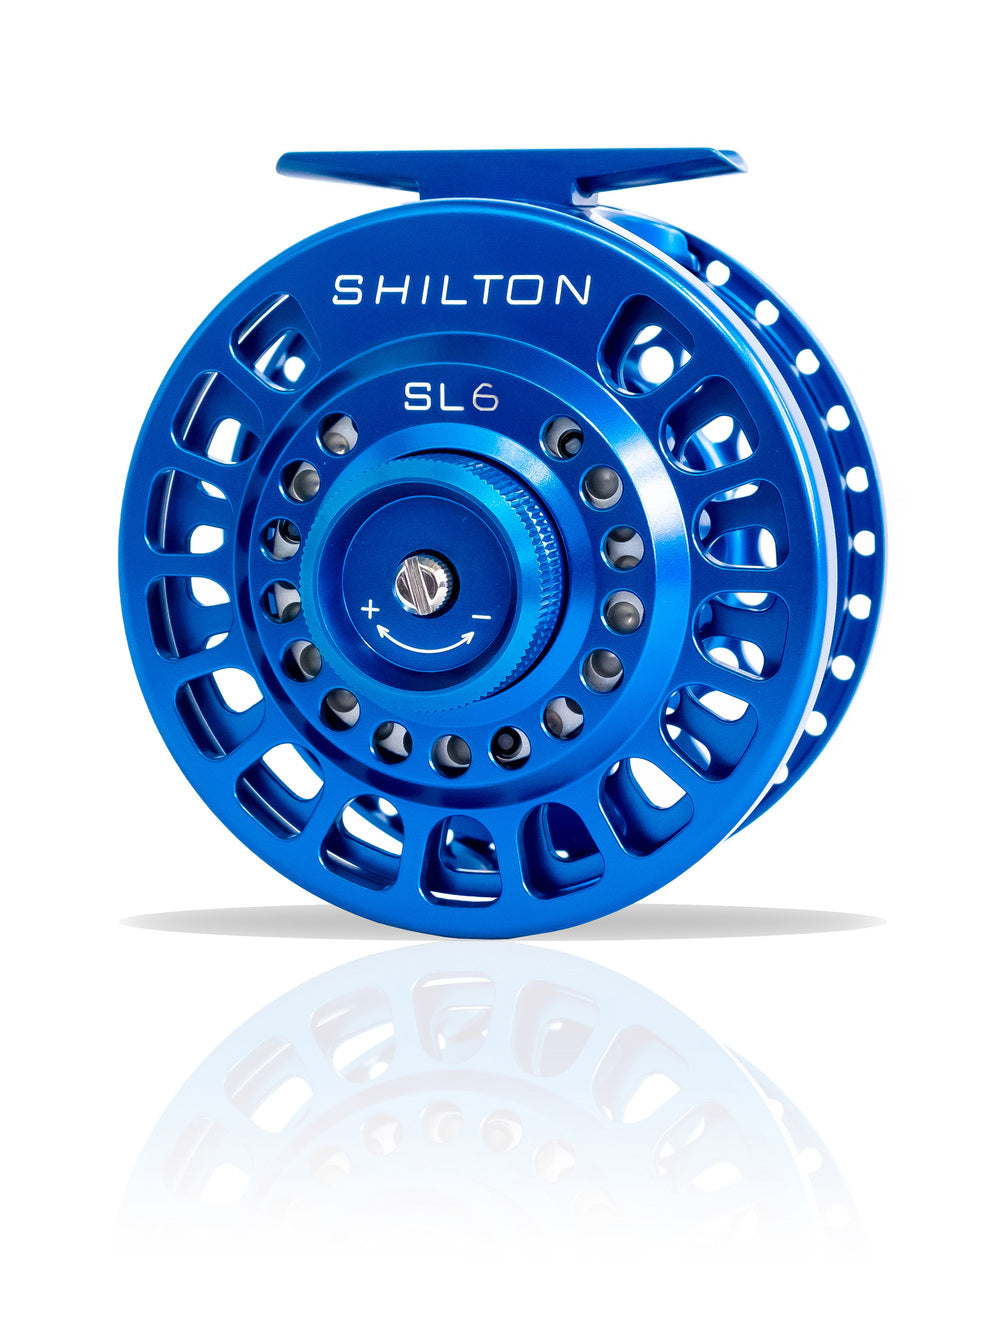 Shilton SL4 Blue Reel (6-7wt)